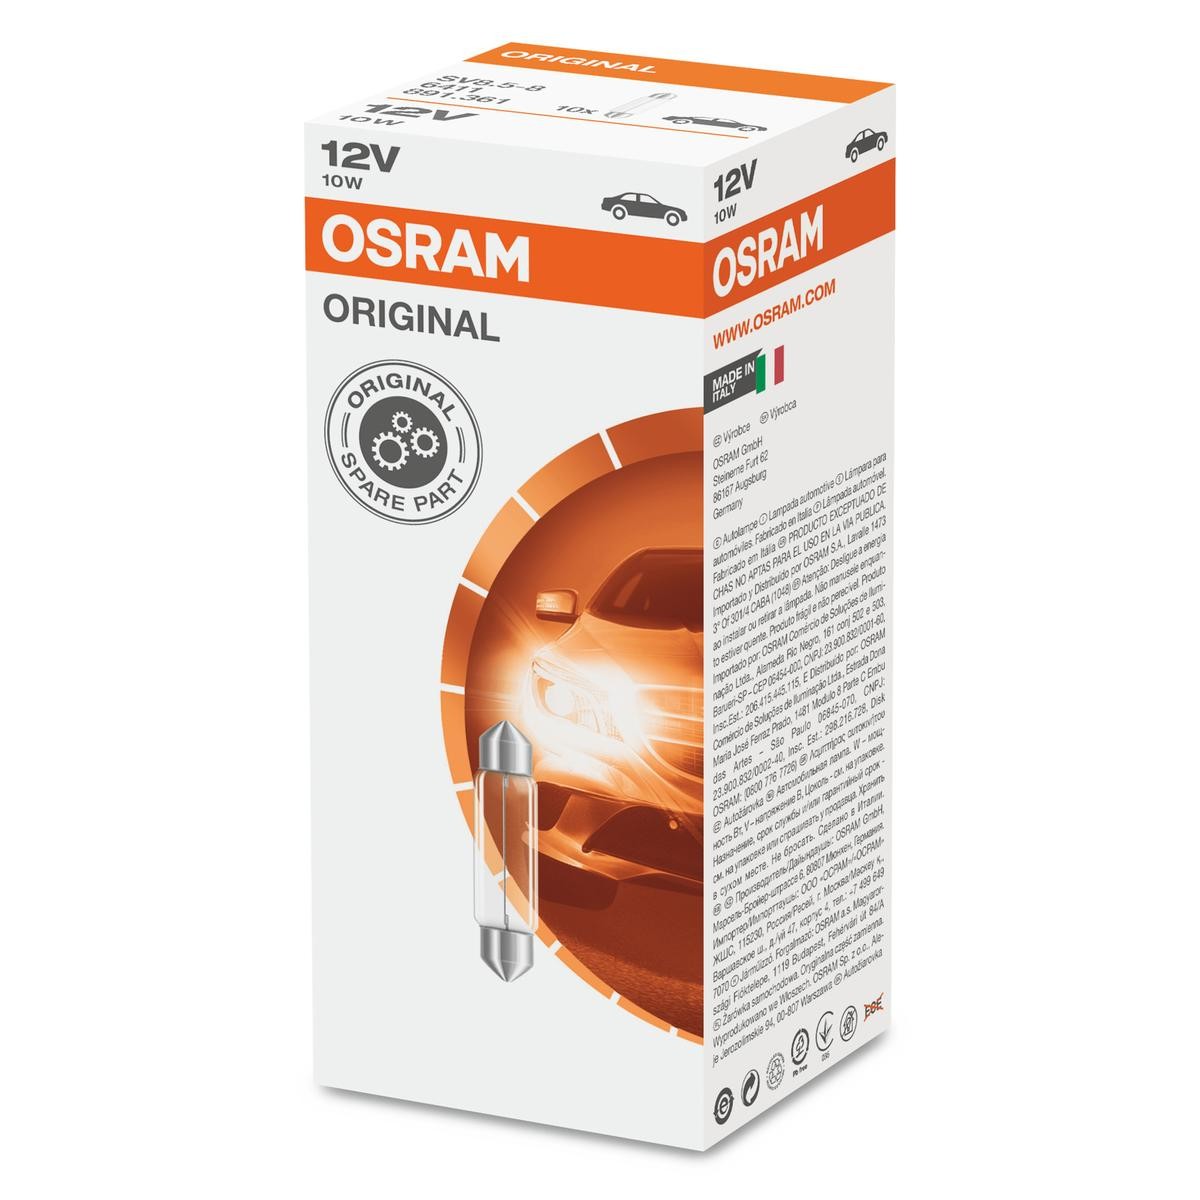 6411 OSRAM ORIGINAL 12V 10W, Socket Bulb, SV8,5-8 Bulb 6411 cheap